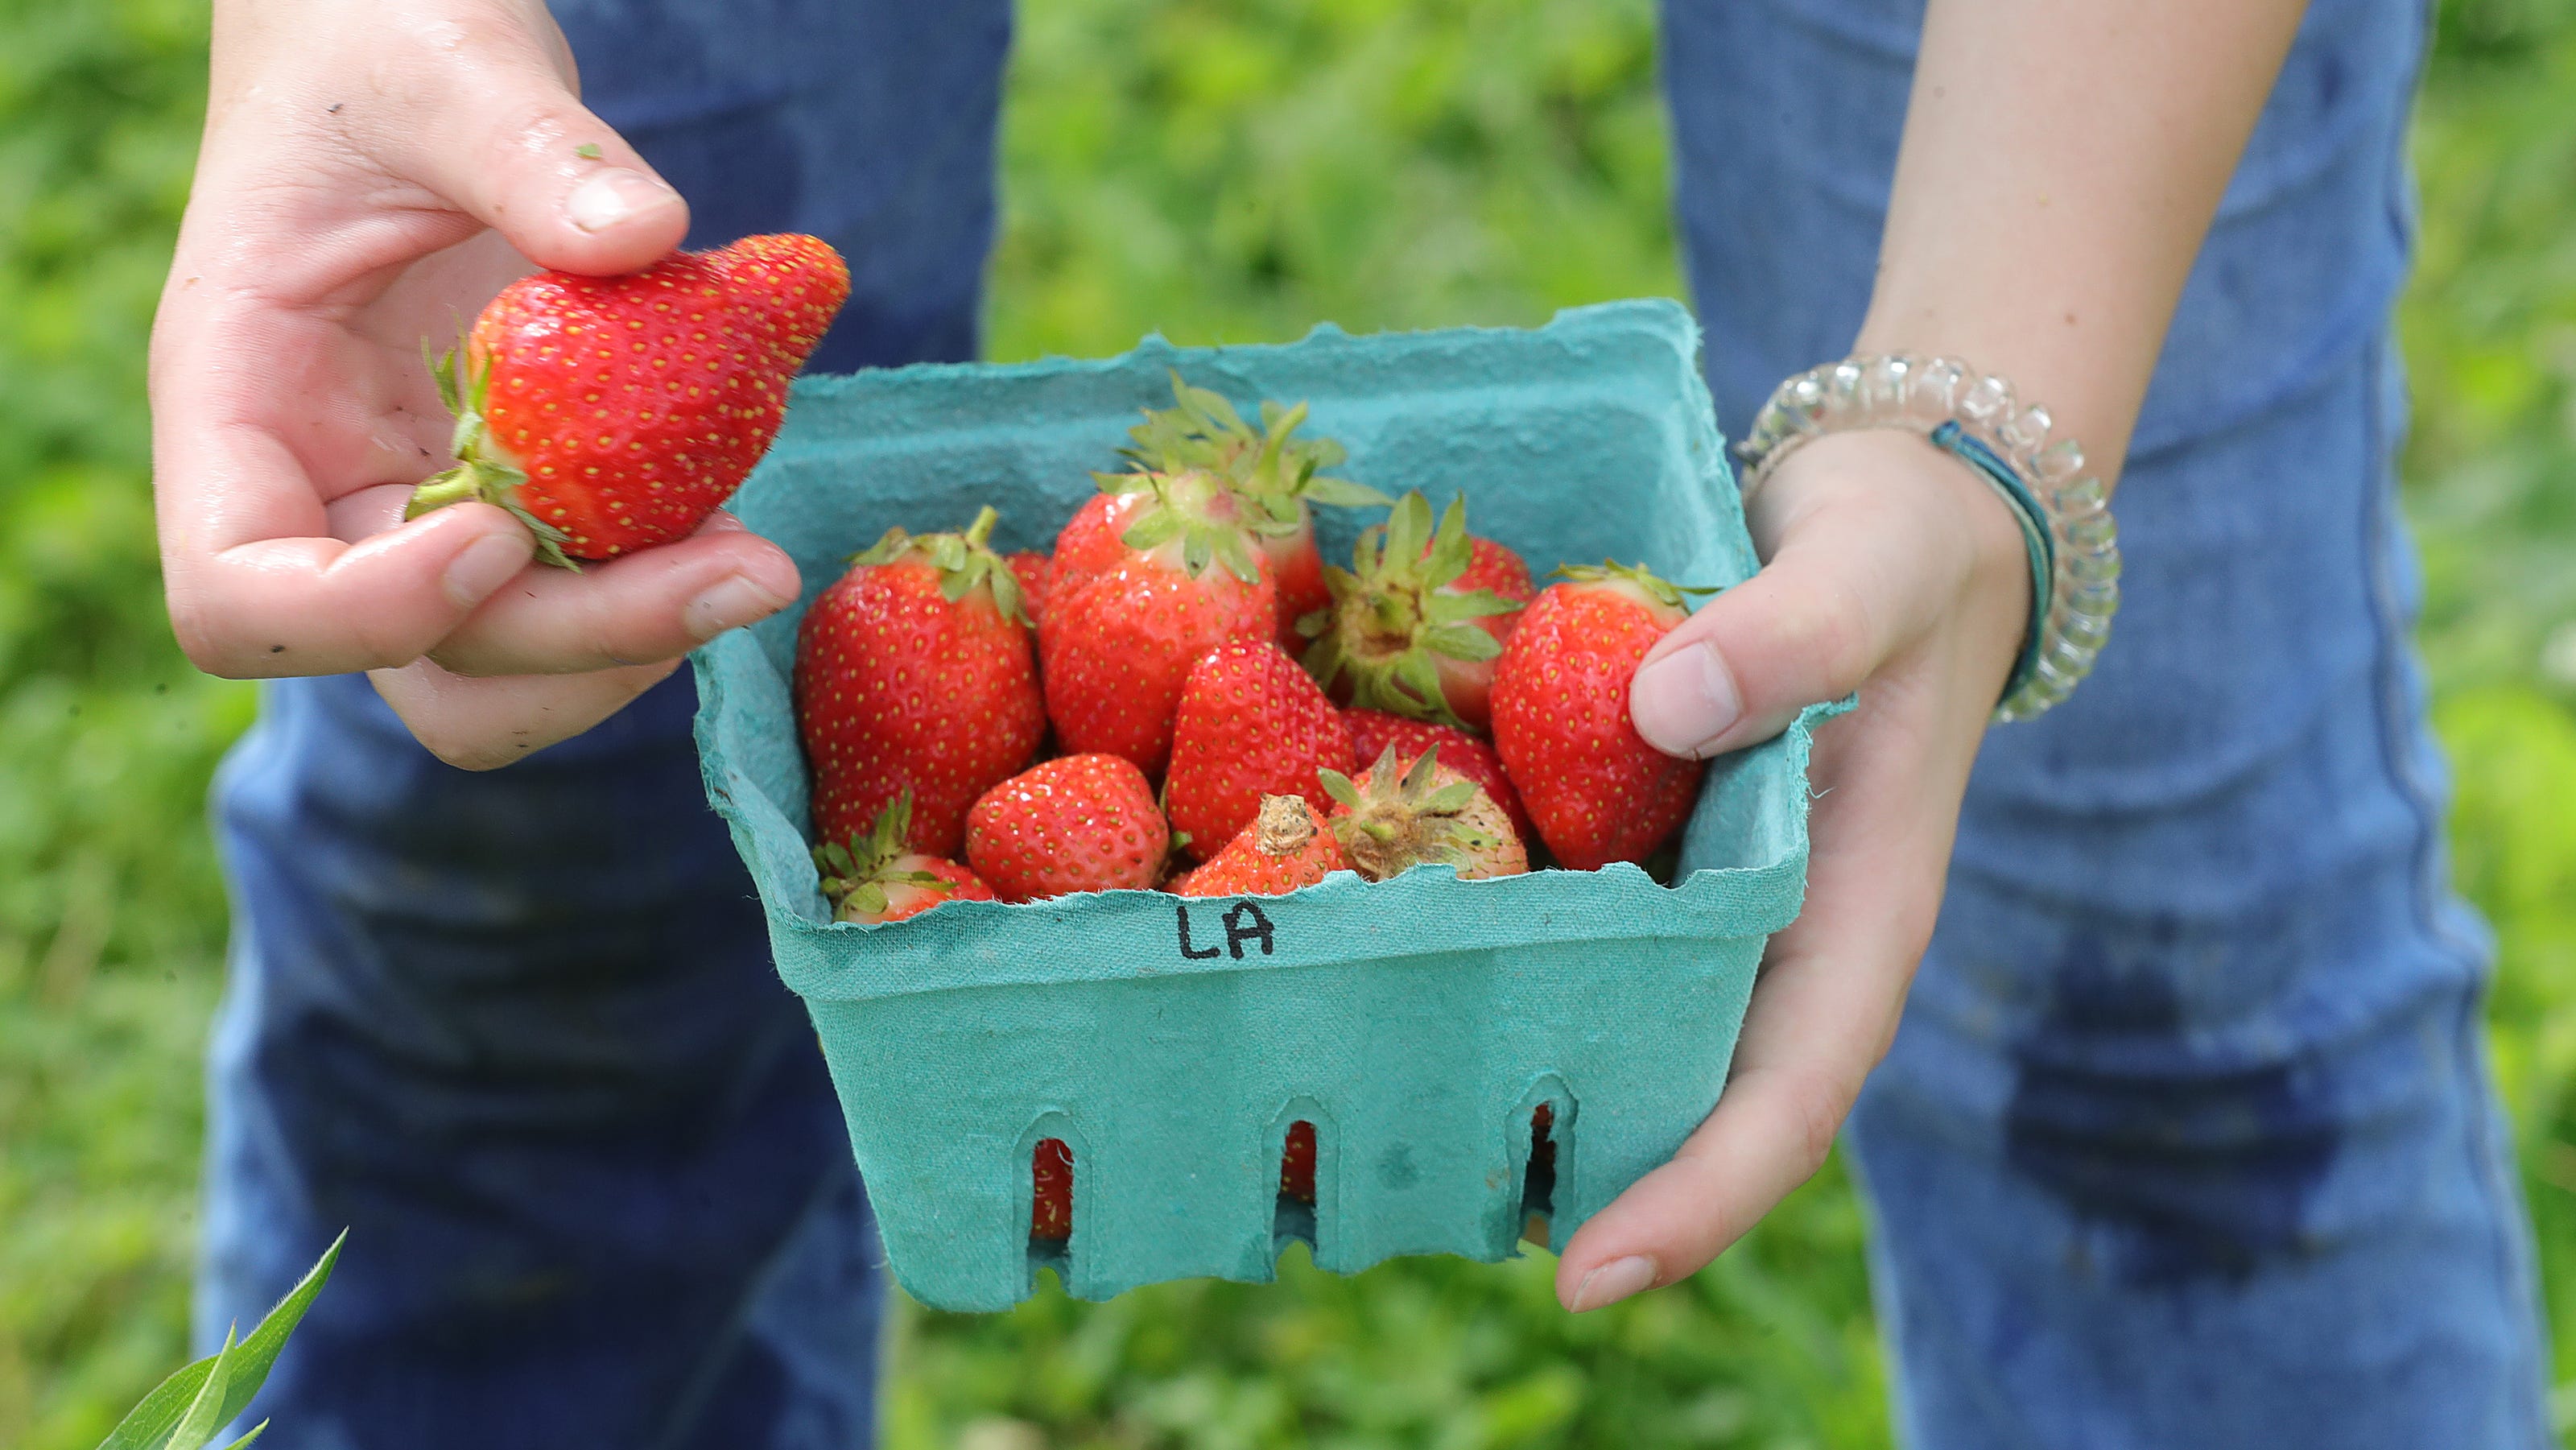 Where to pick strawberries in Northeast Ohio